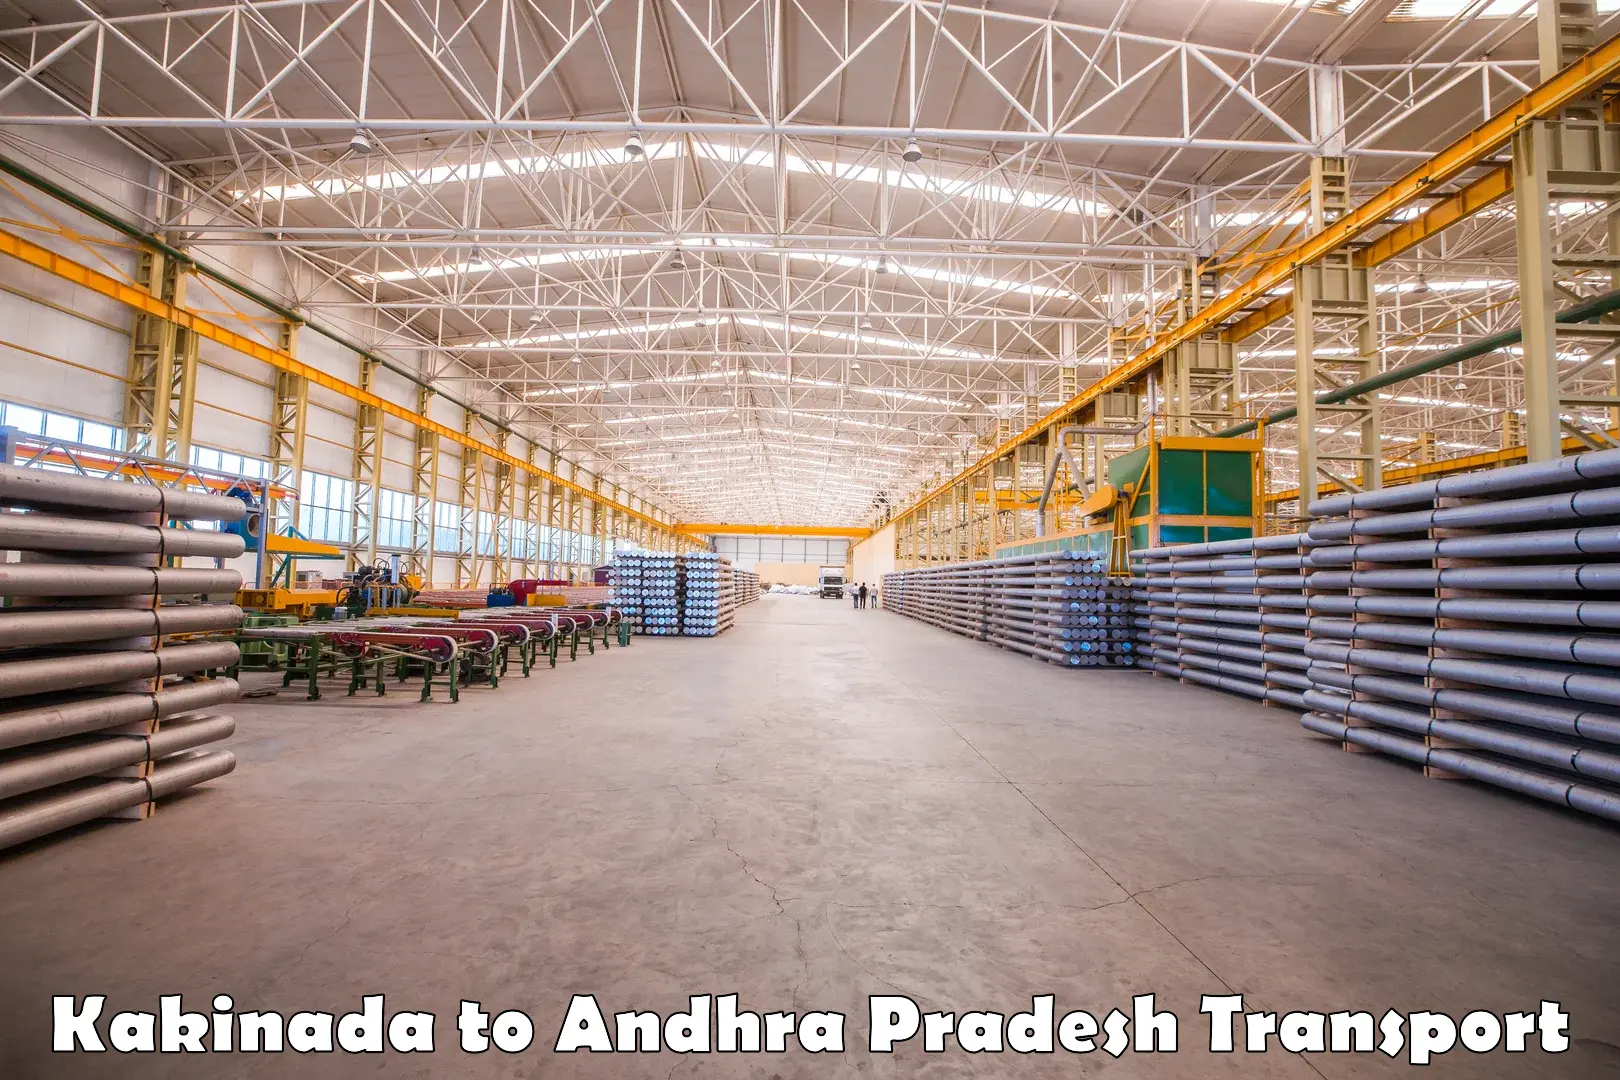 Truck transport companies in India Kakinada to Andhra Pradesh